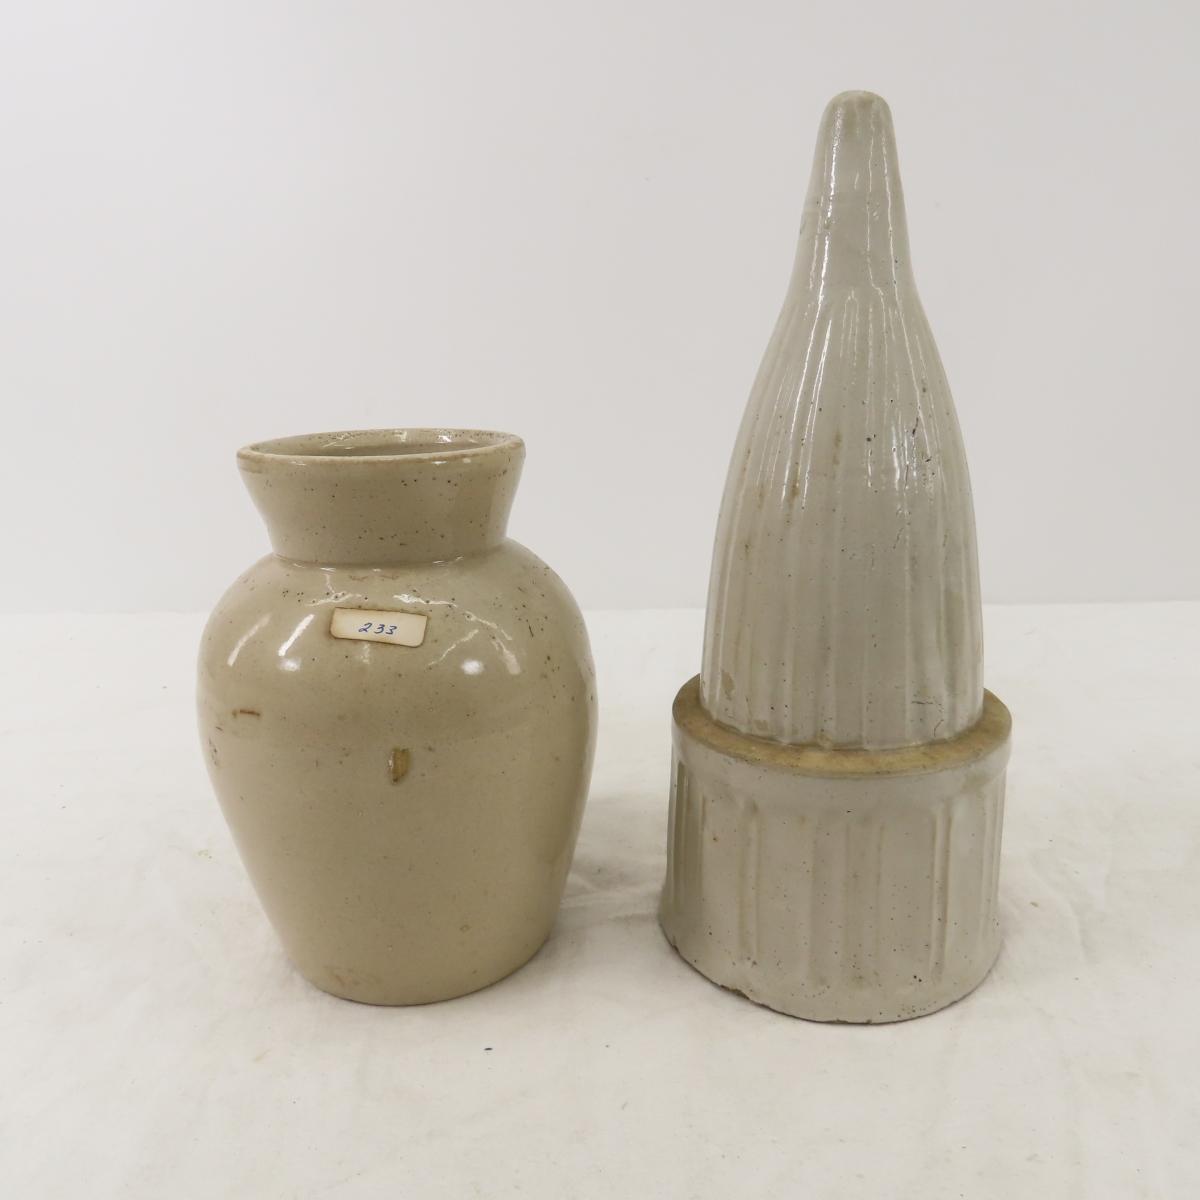 Stoneware Cemetery Vase, crocks and more